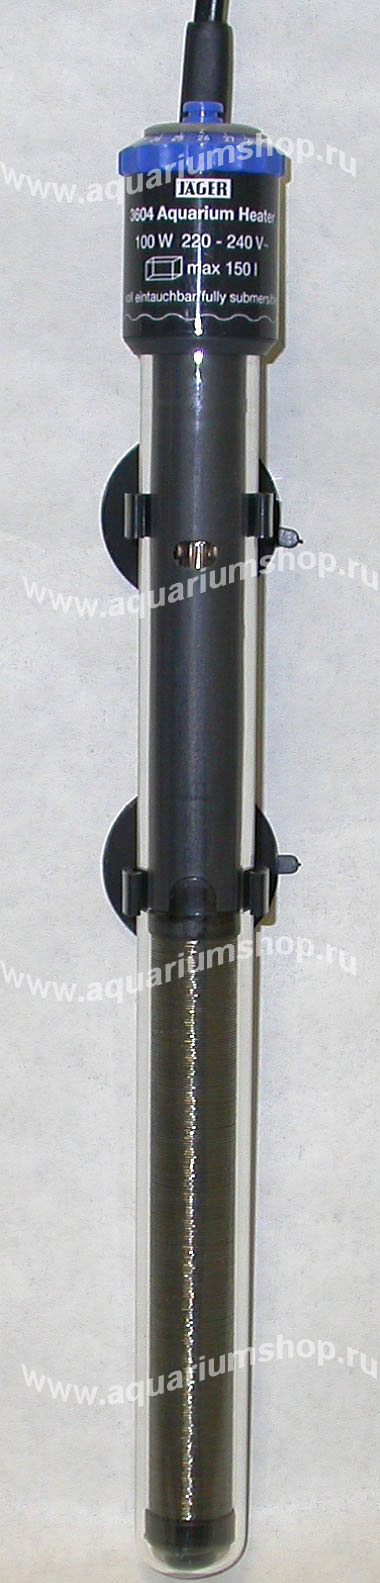 JAGER 100W (220-240V) 3604010 нагреватель с терморег. для акв. 100-150л 100Вт разм. 310xD24,5мм